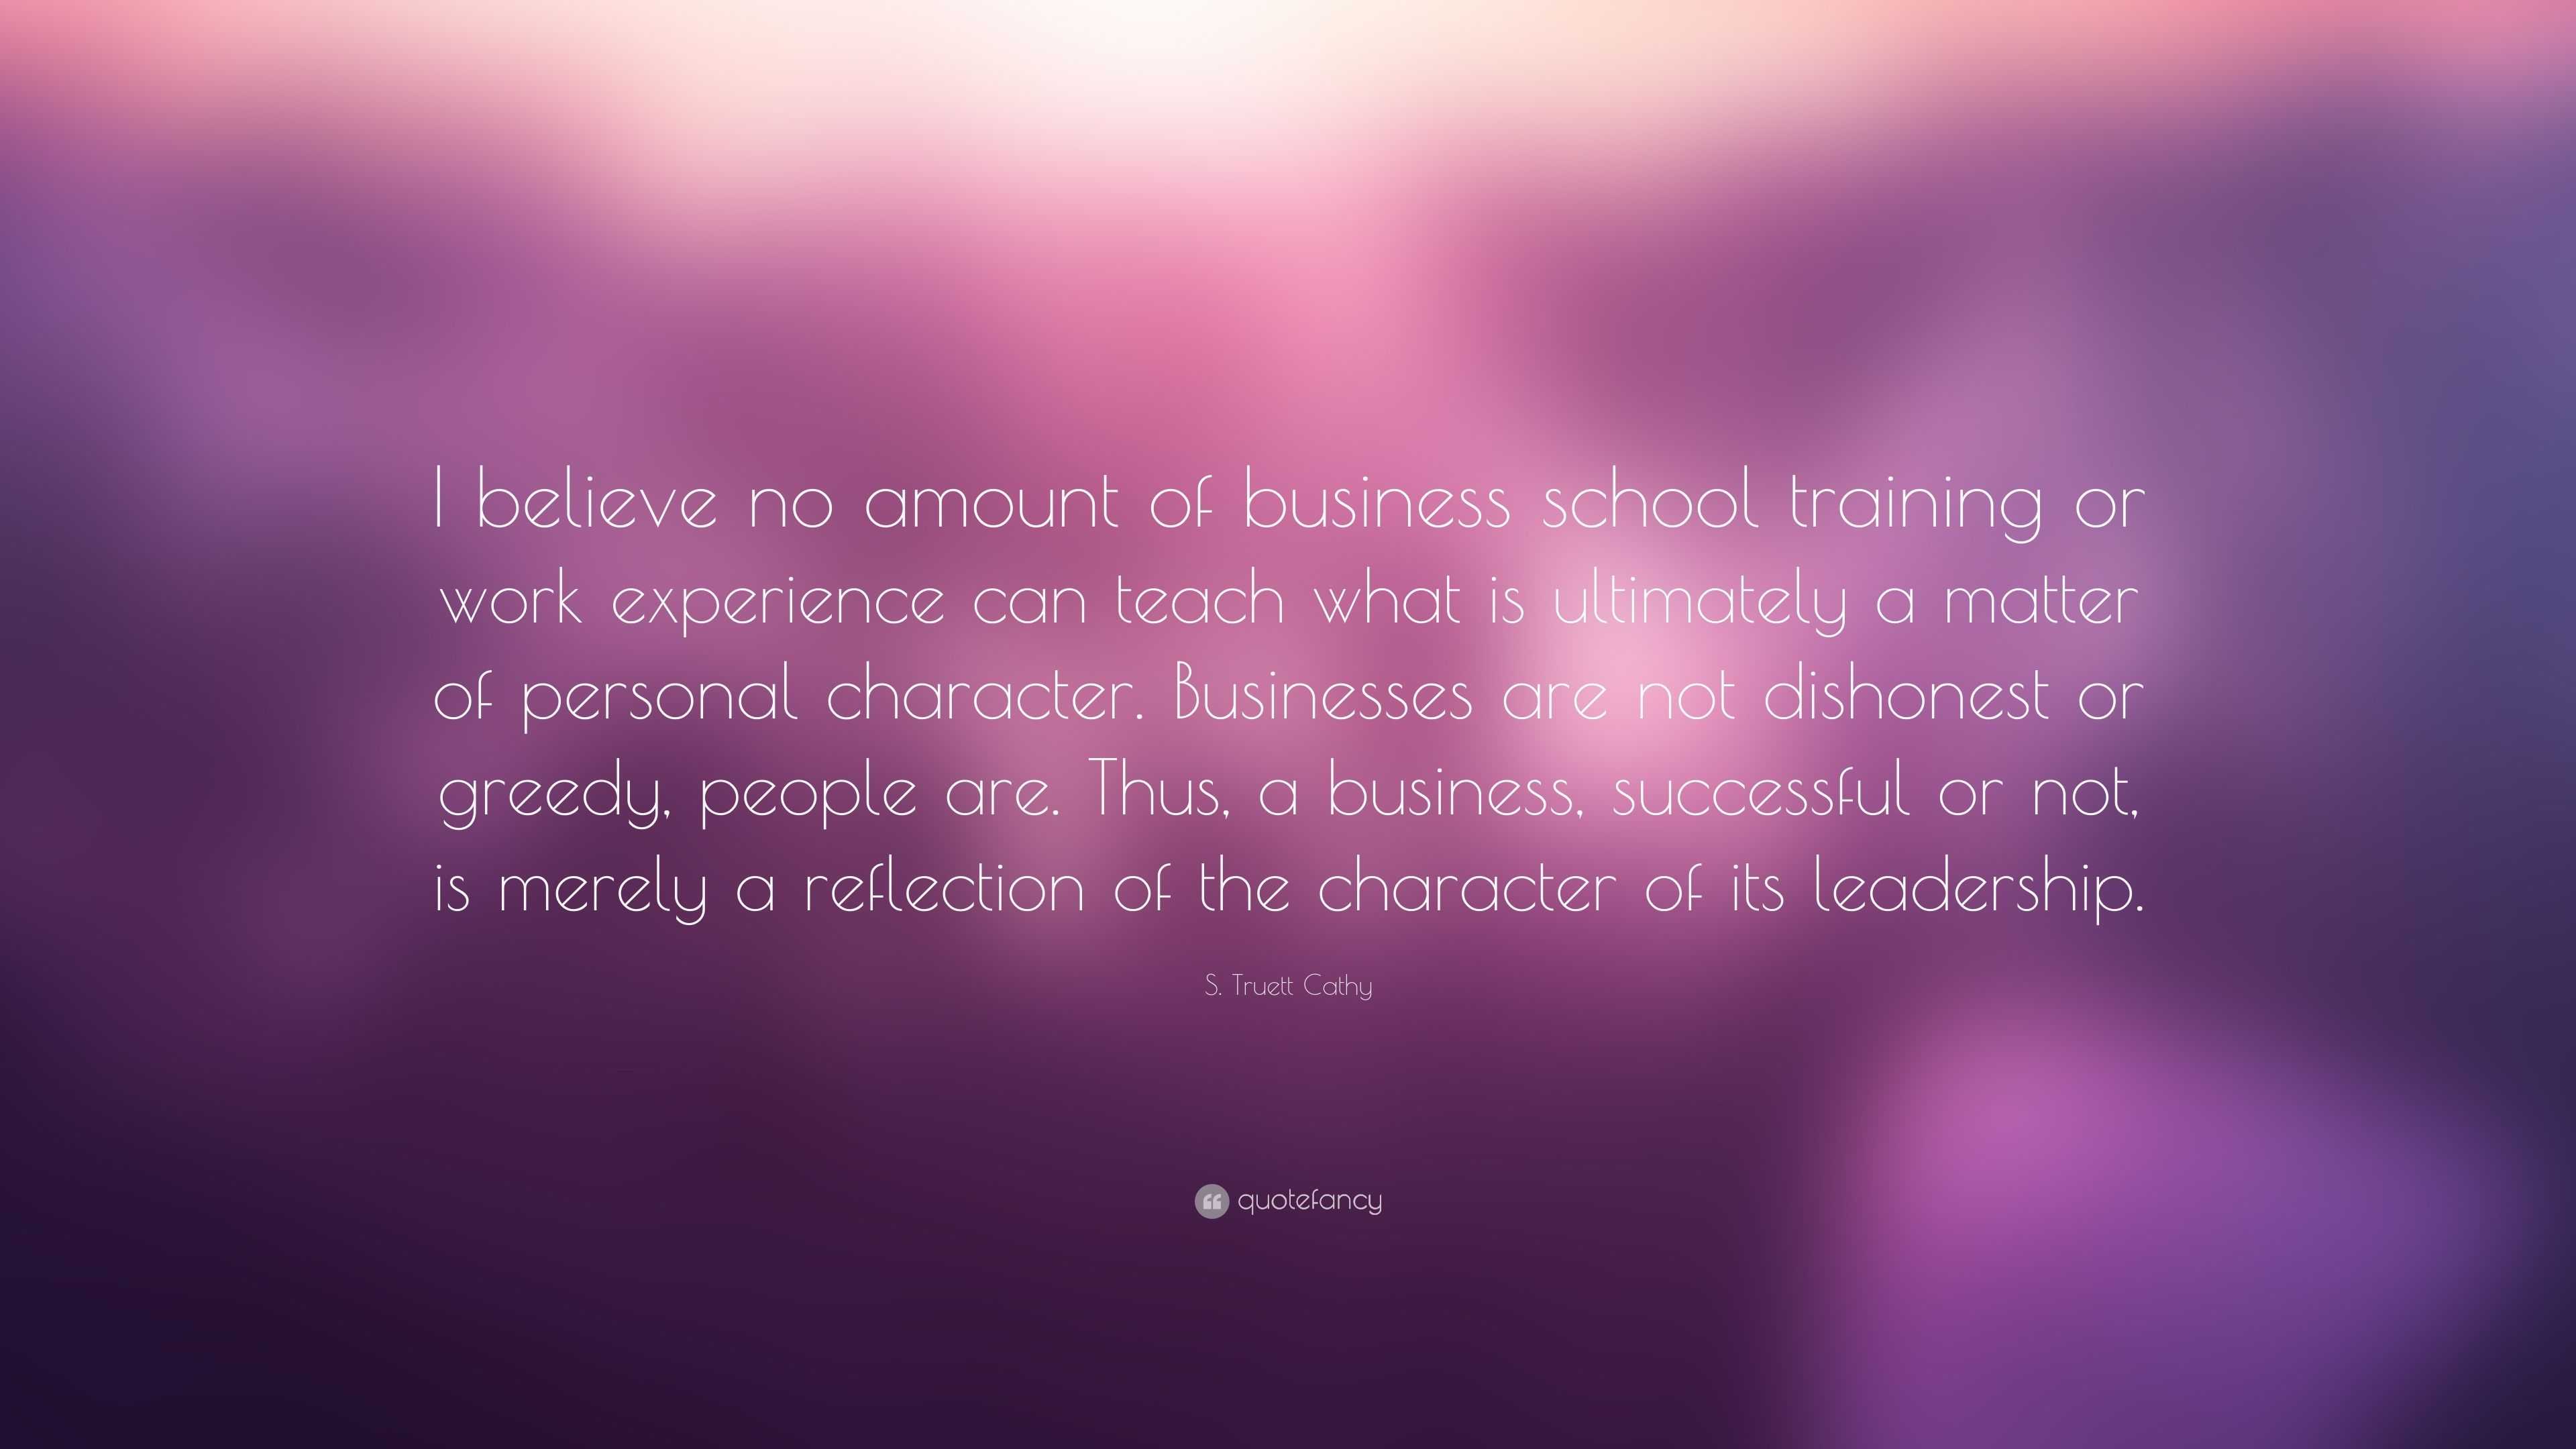 S. Truett Cathy Quote: “I believe no amount of business school training ...